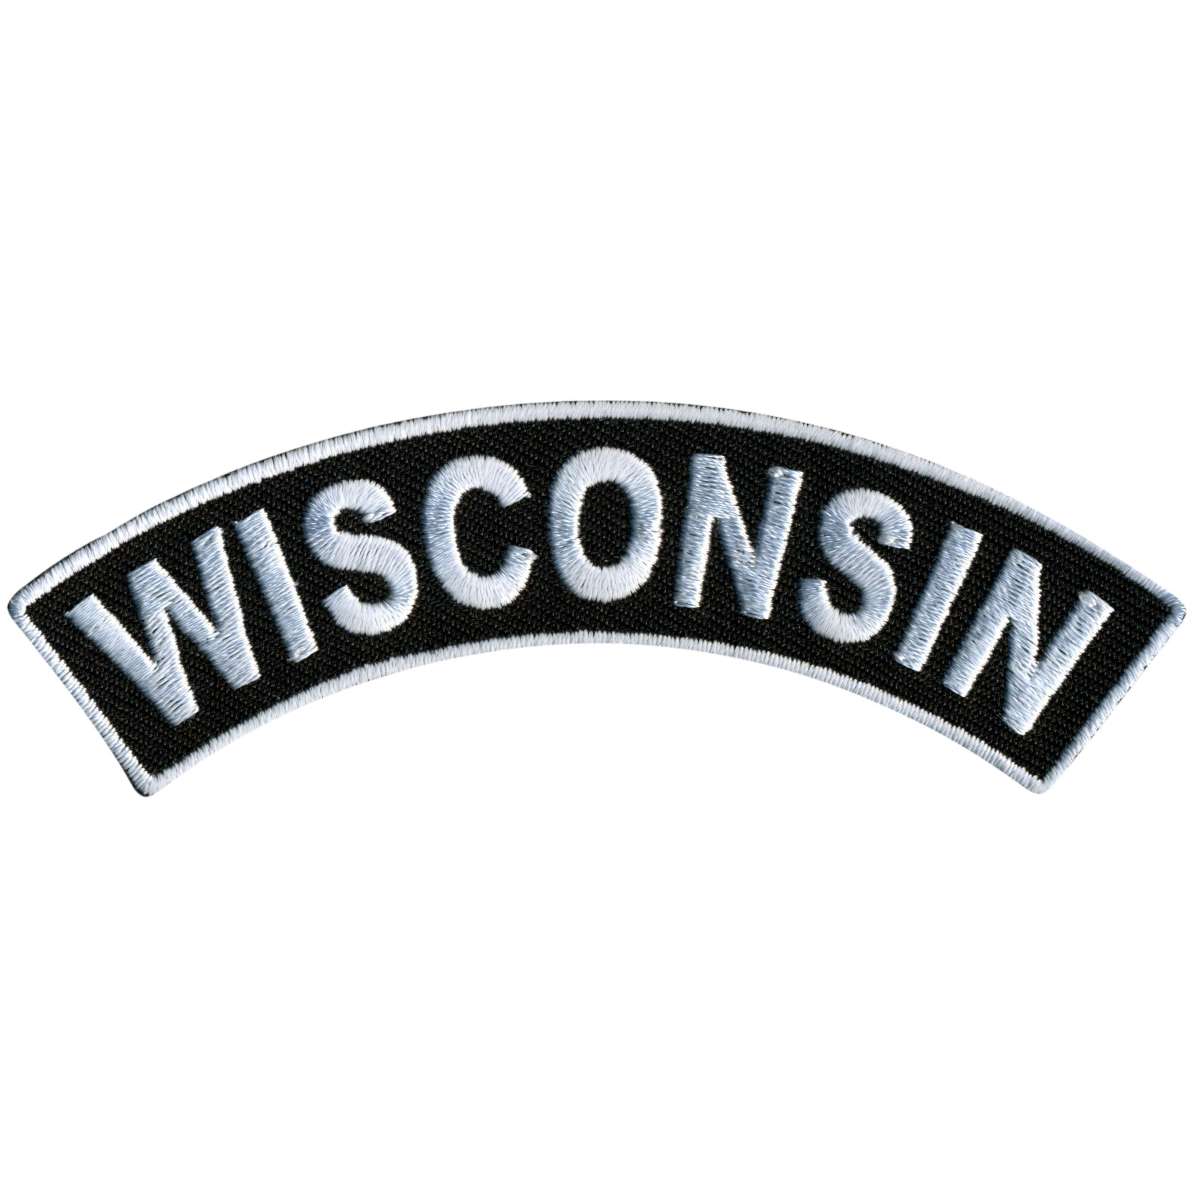 Hot Leathers Wisconsin 4” X 1” Top Rocker Patch PPM4098